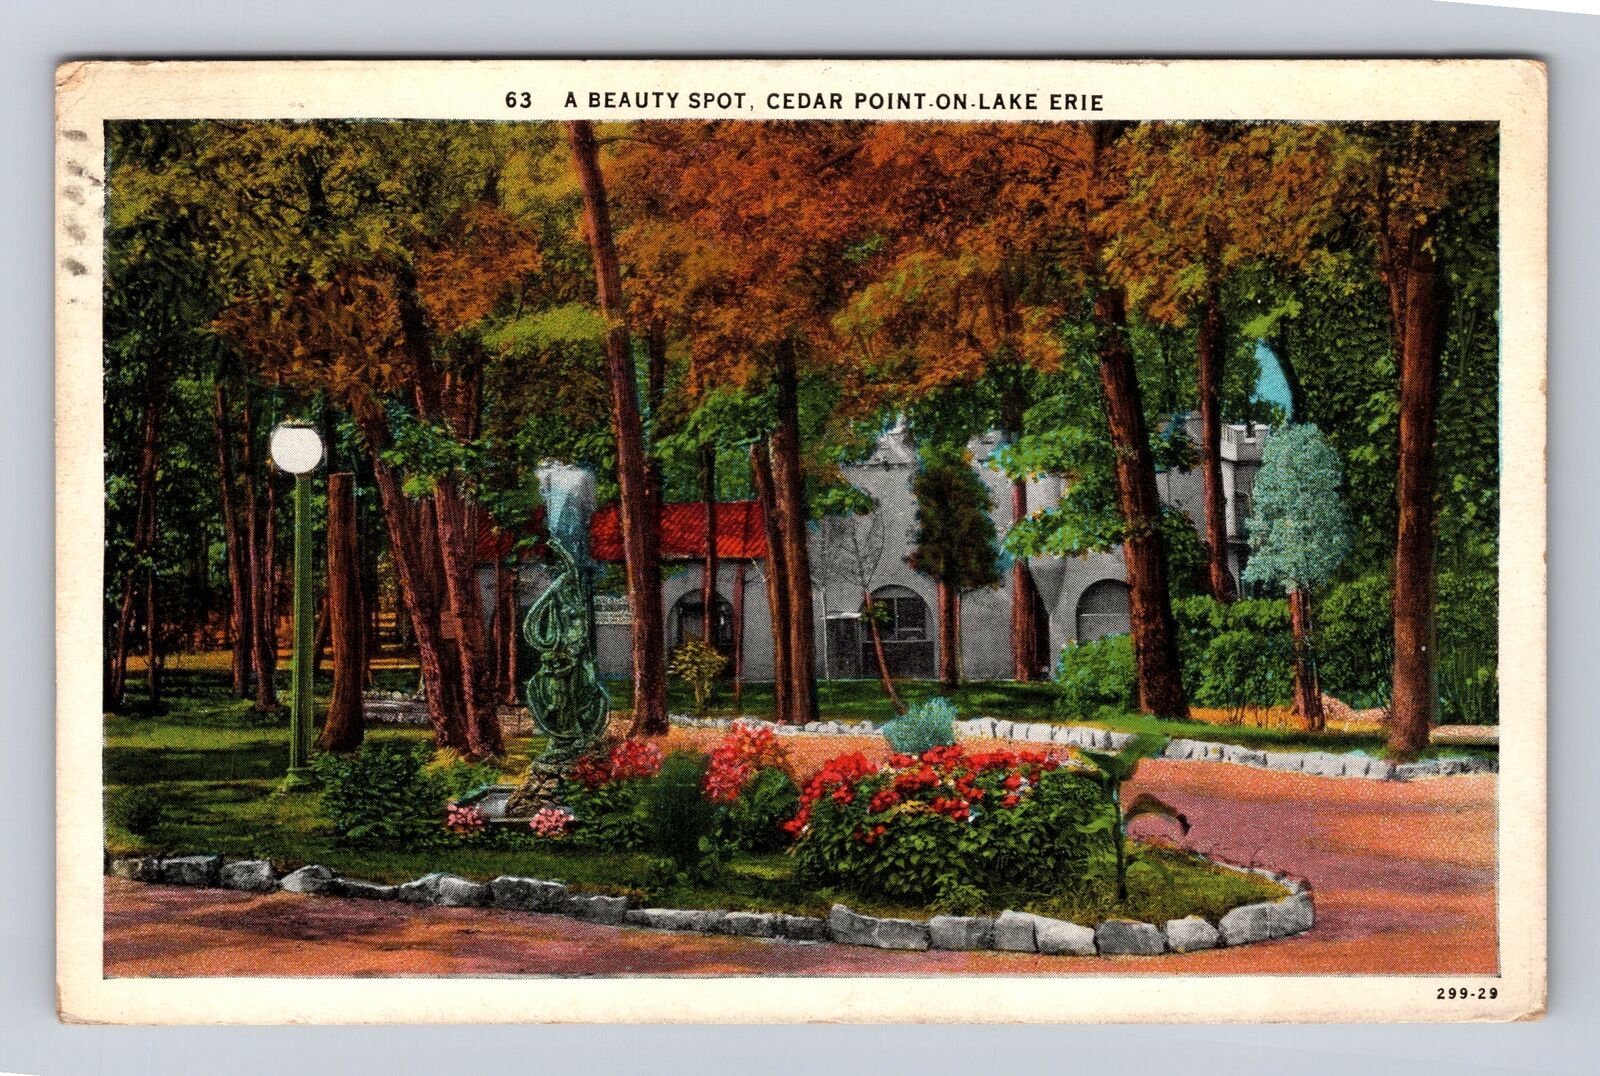 Cedar Point On Lake Erie, OH-Ohio, A Beauty Spot, Vintage c1930 Postcard